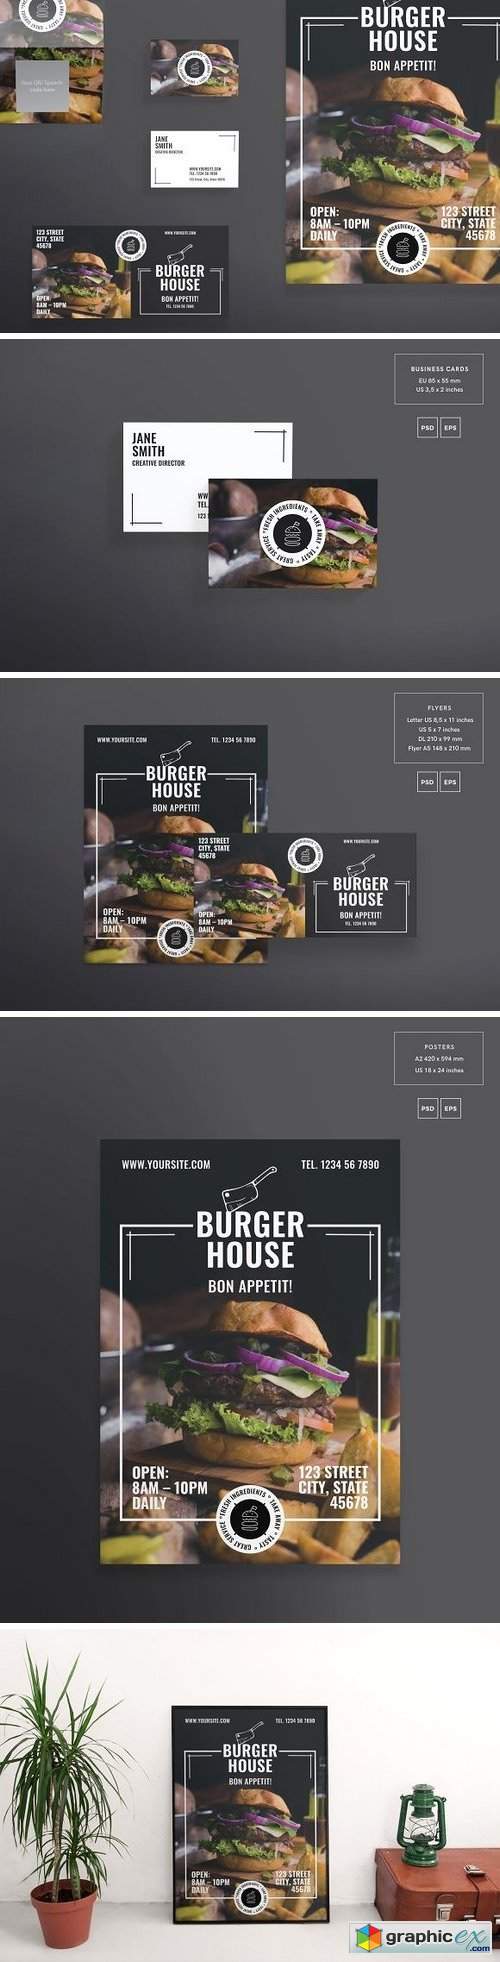 Print Pack | Burger House